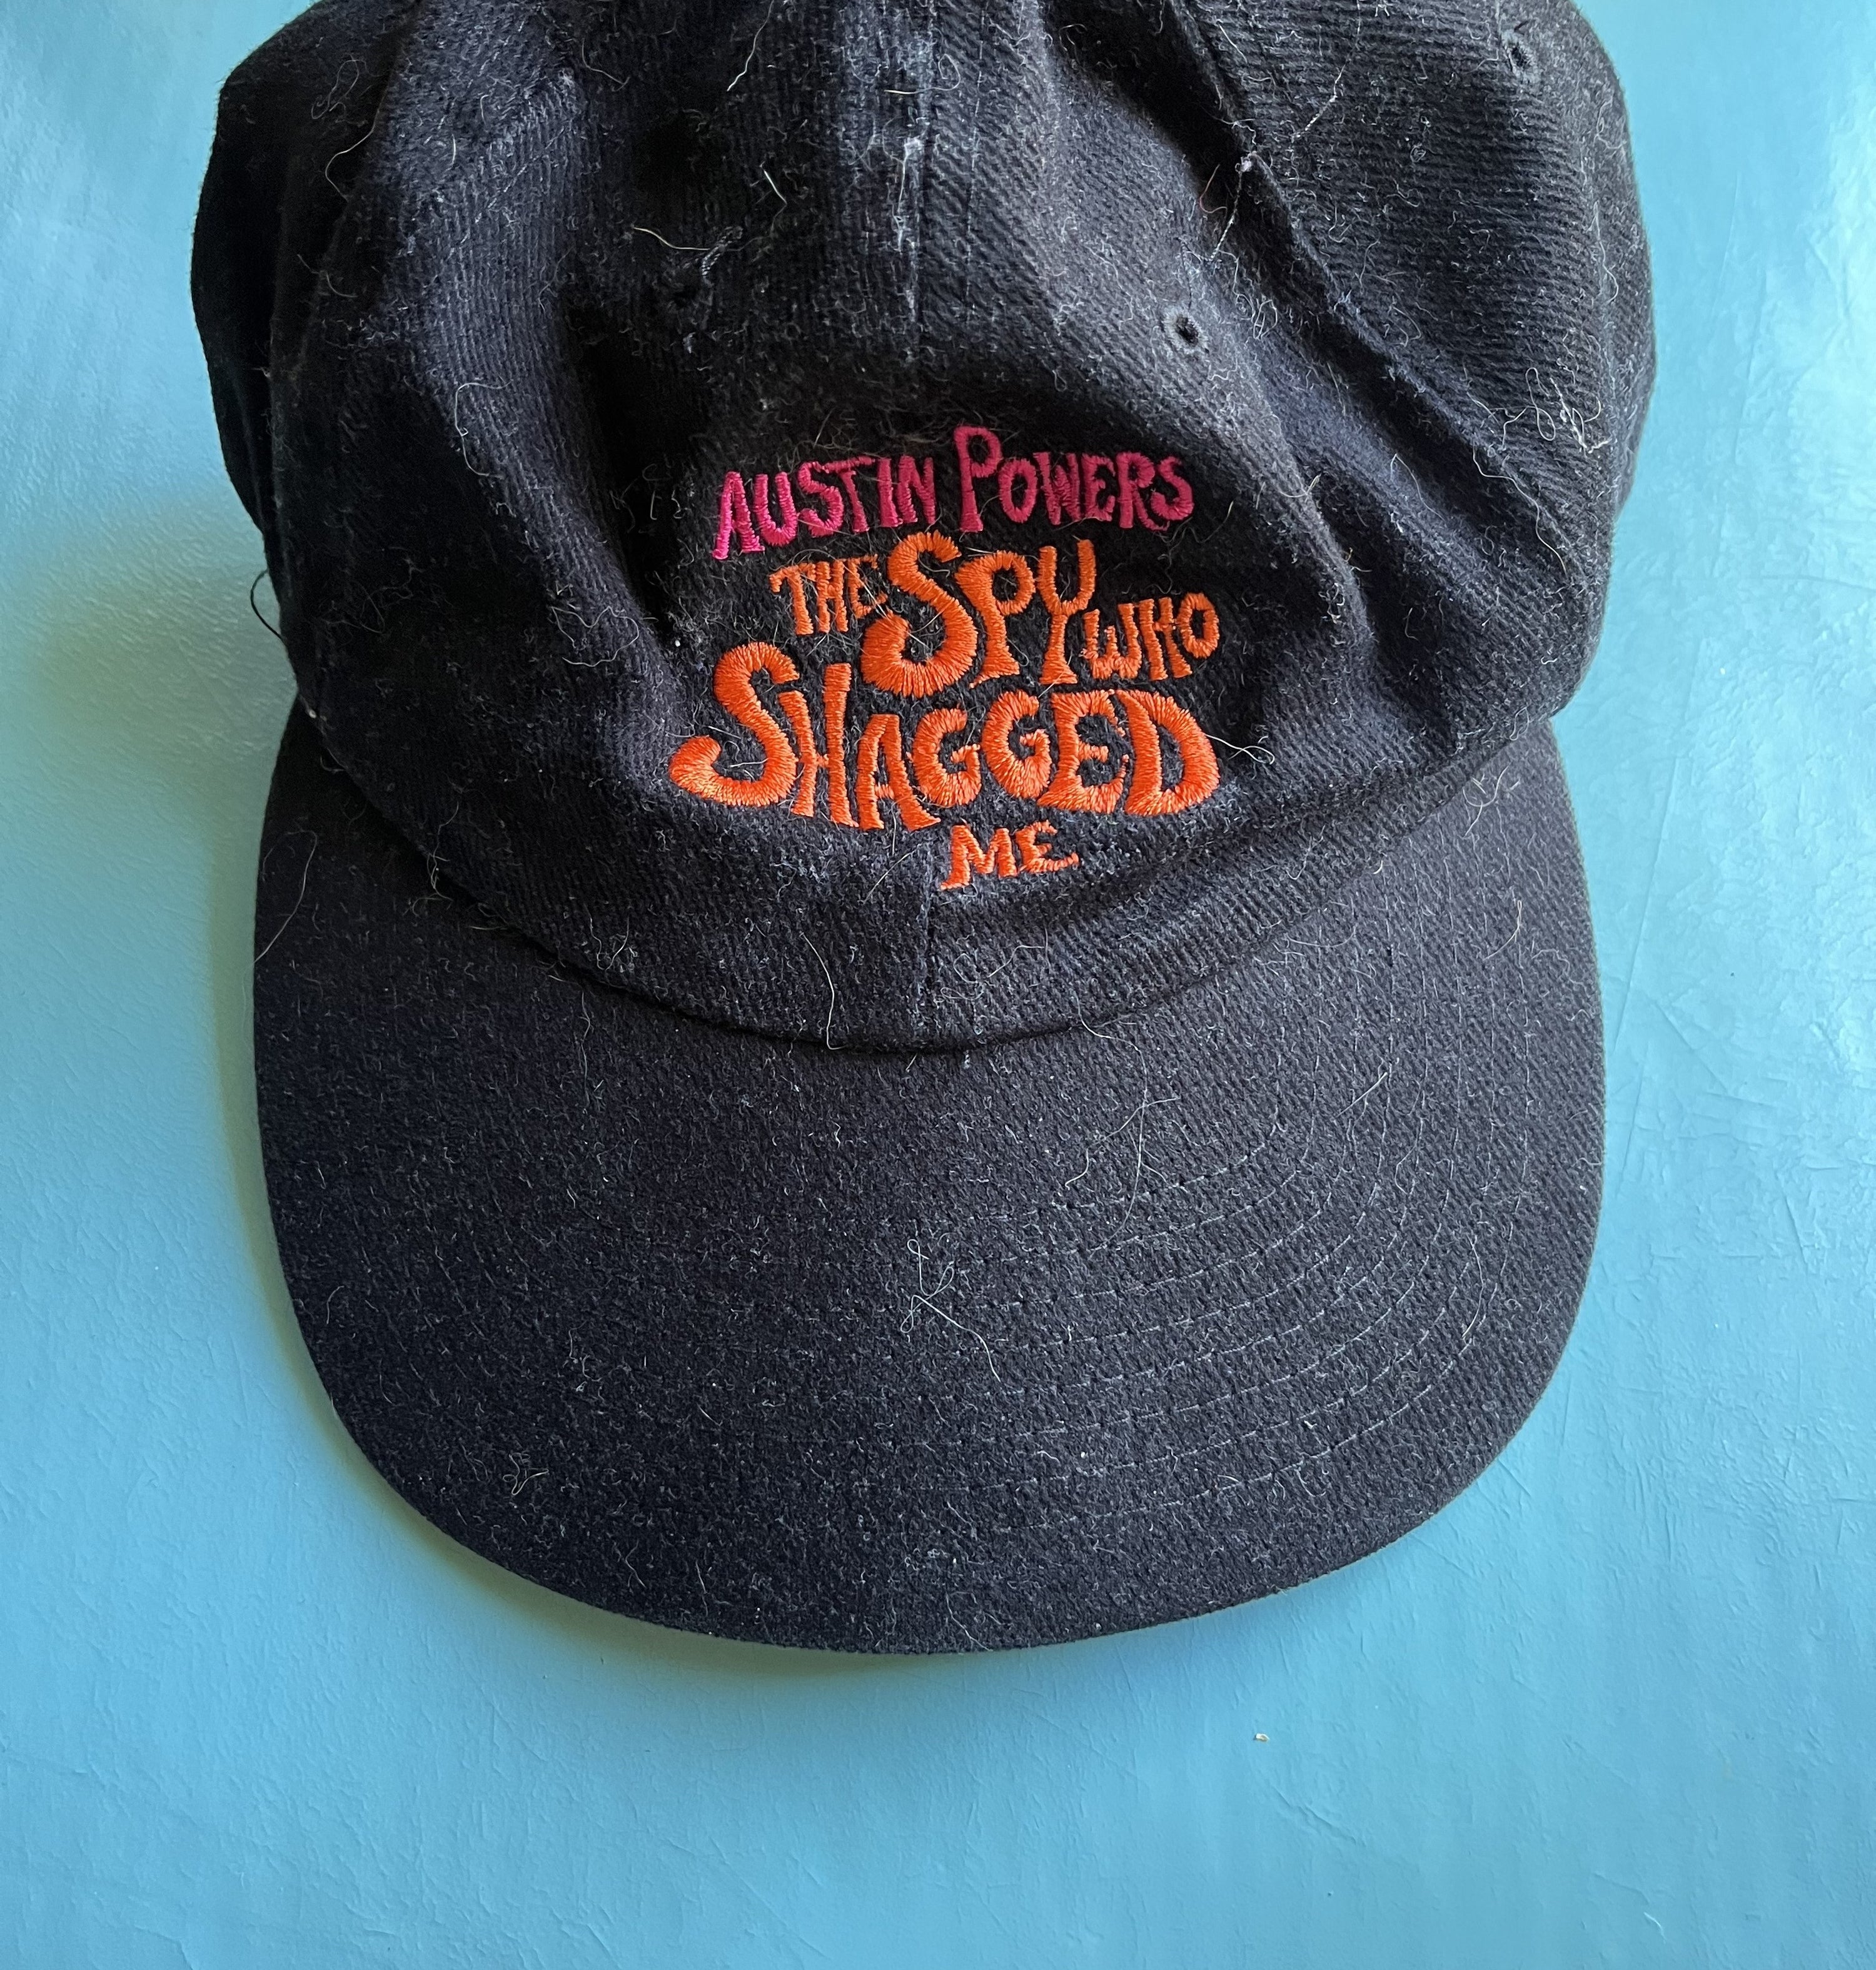 a dark ball cap for the movie Austin Powers